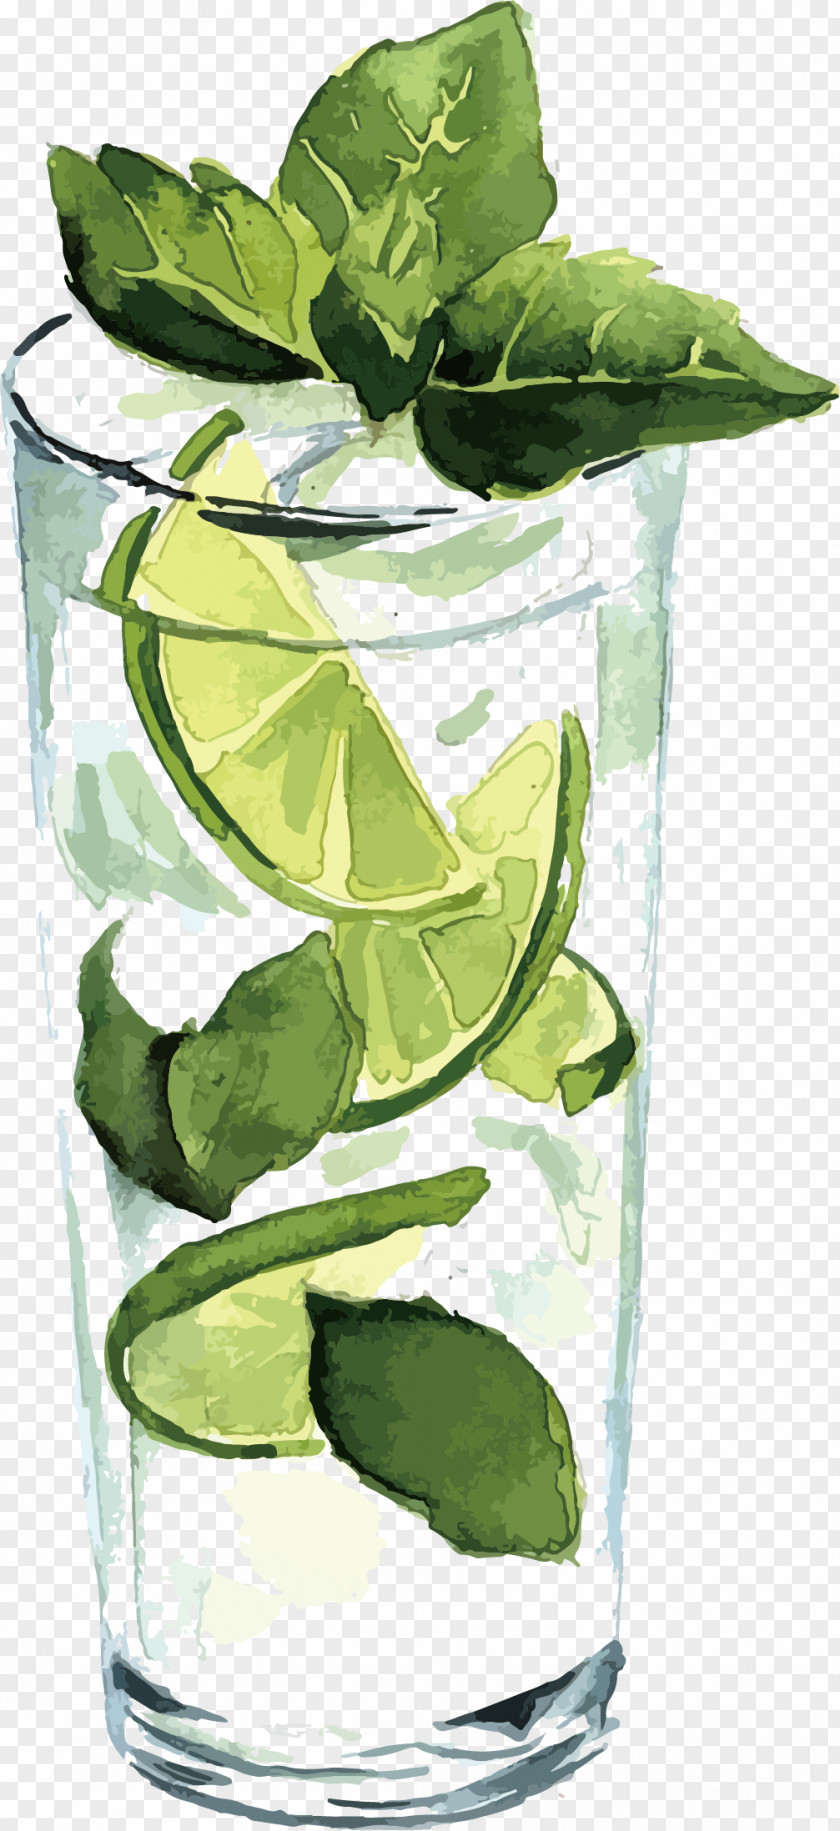 Vector Lemonade Watercolor Painting Illustration PNG